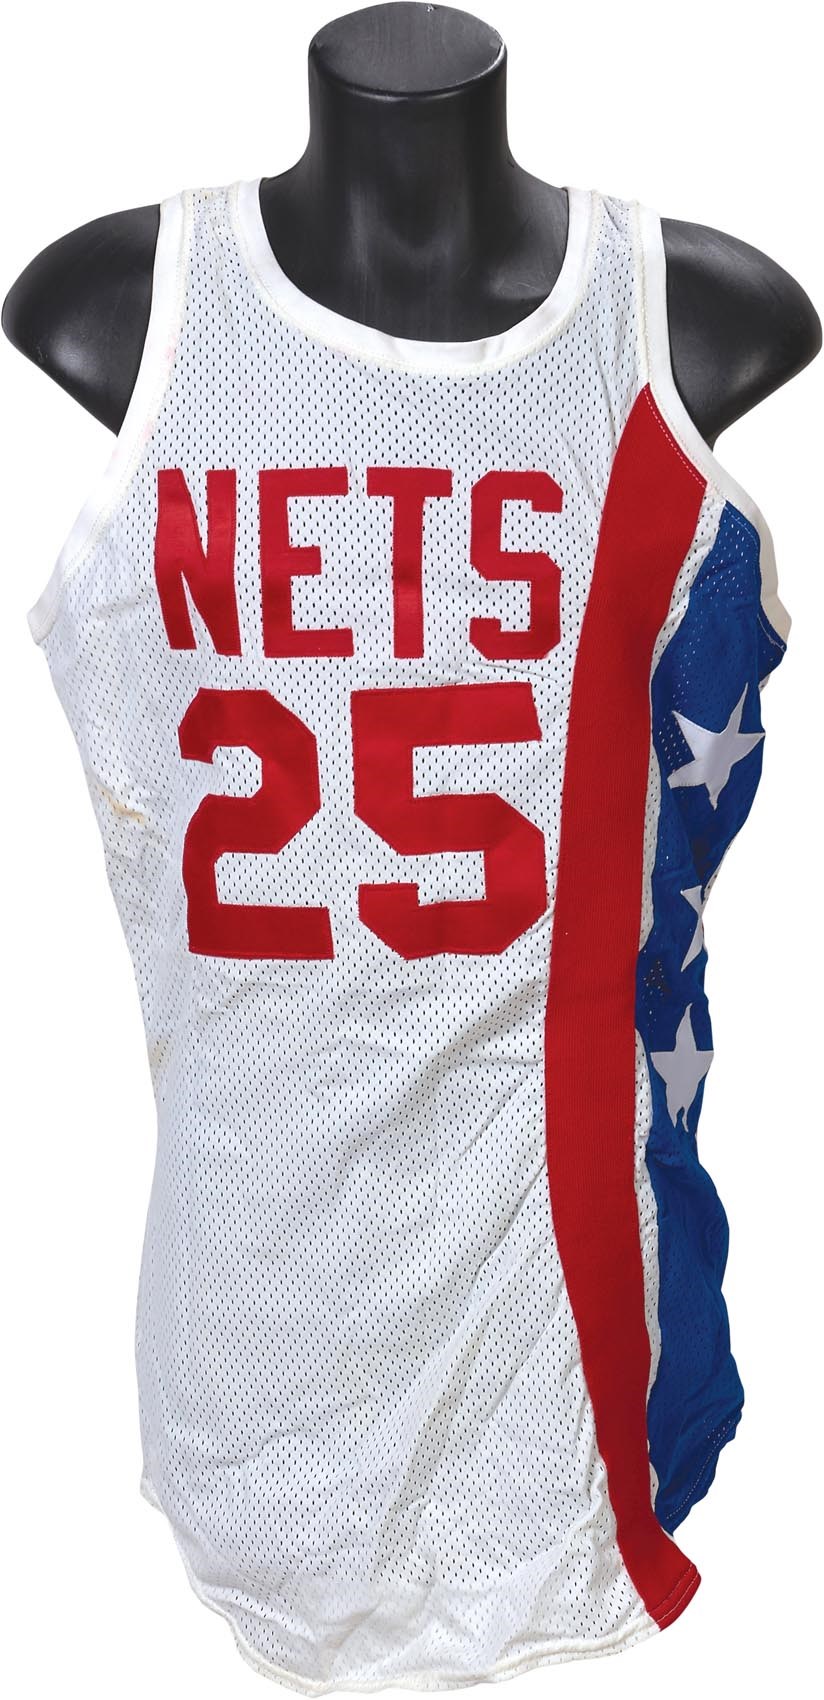 Basketball - 1983 Nets Uniform Custom Made for Joe Taub's Son (ex-Joe Taub Collection)